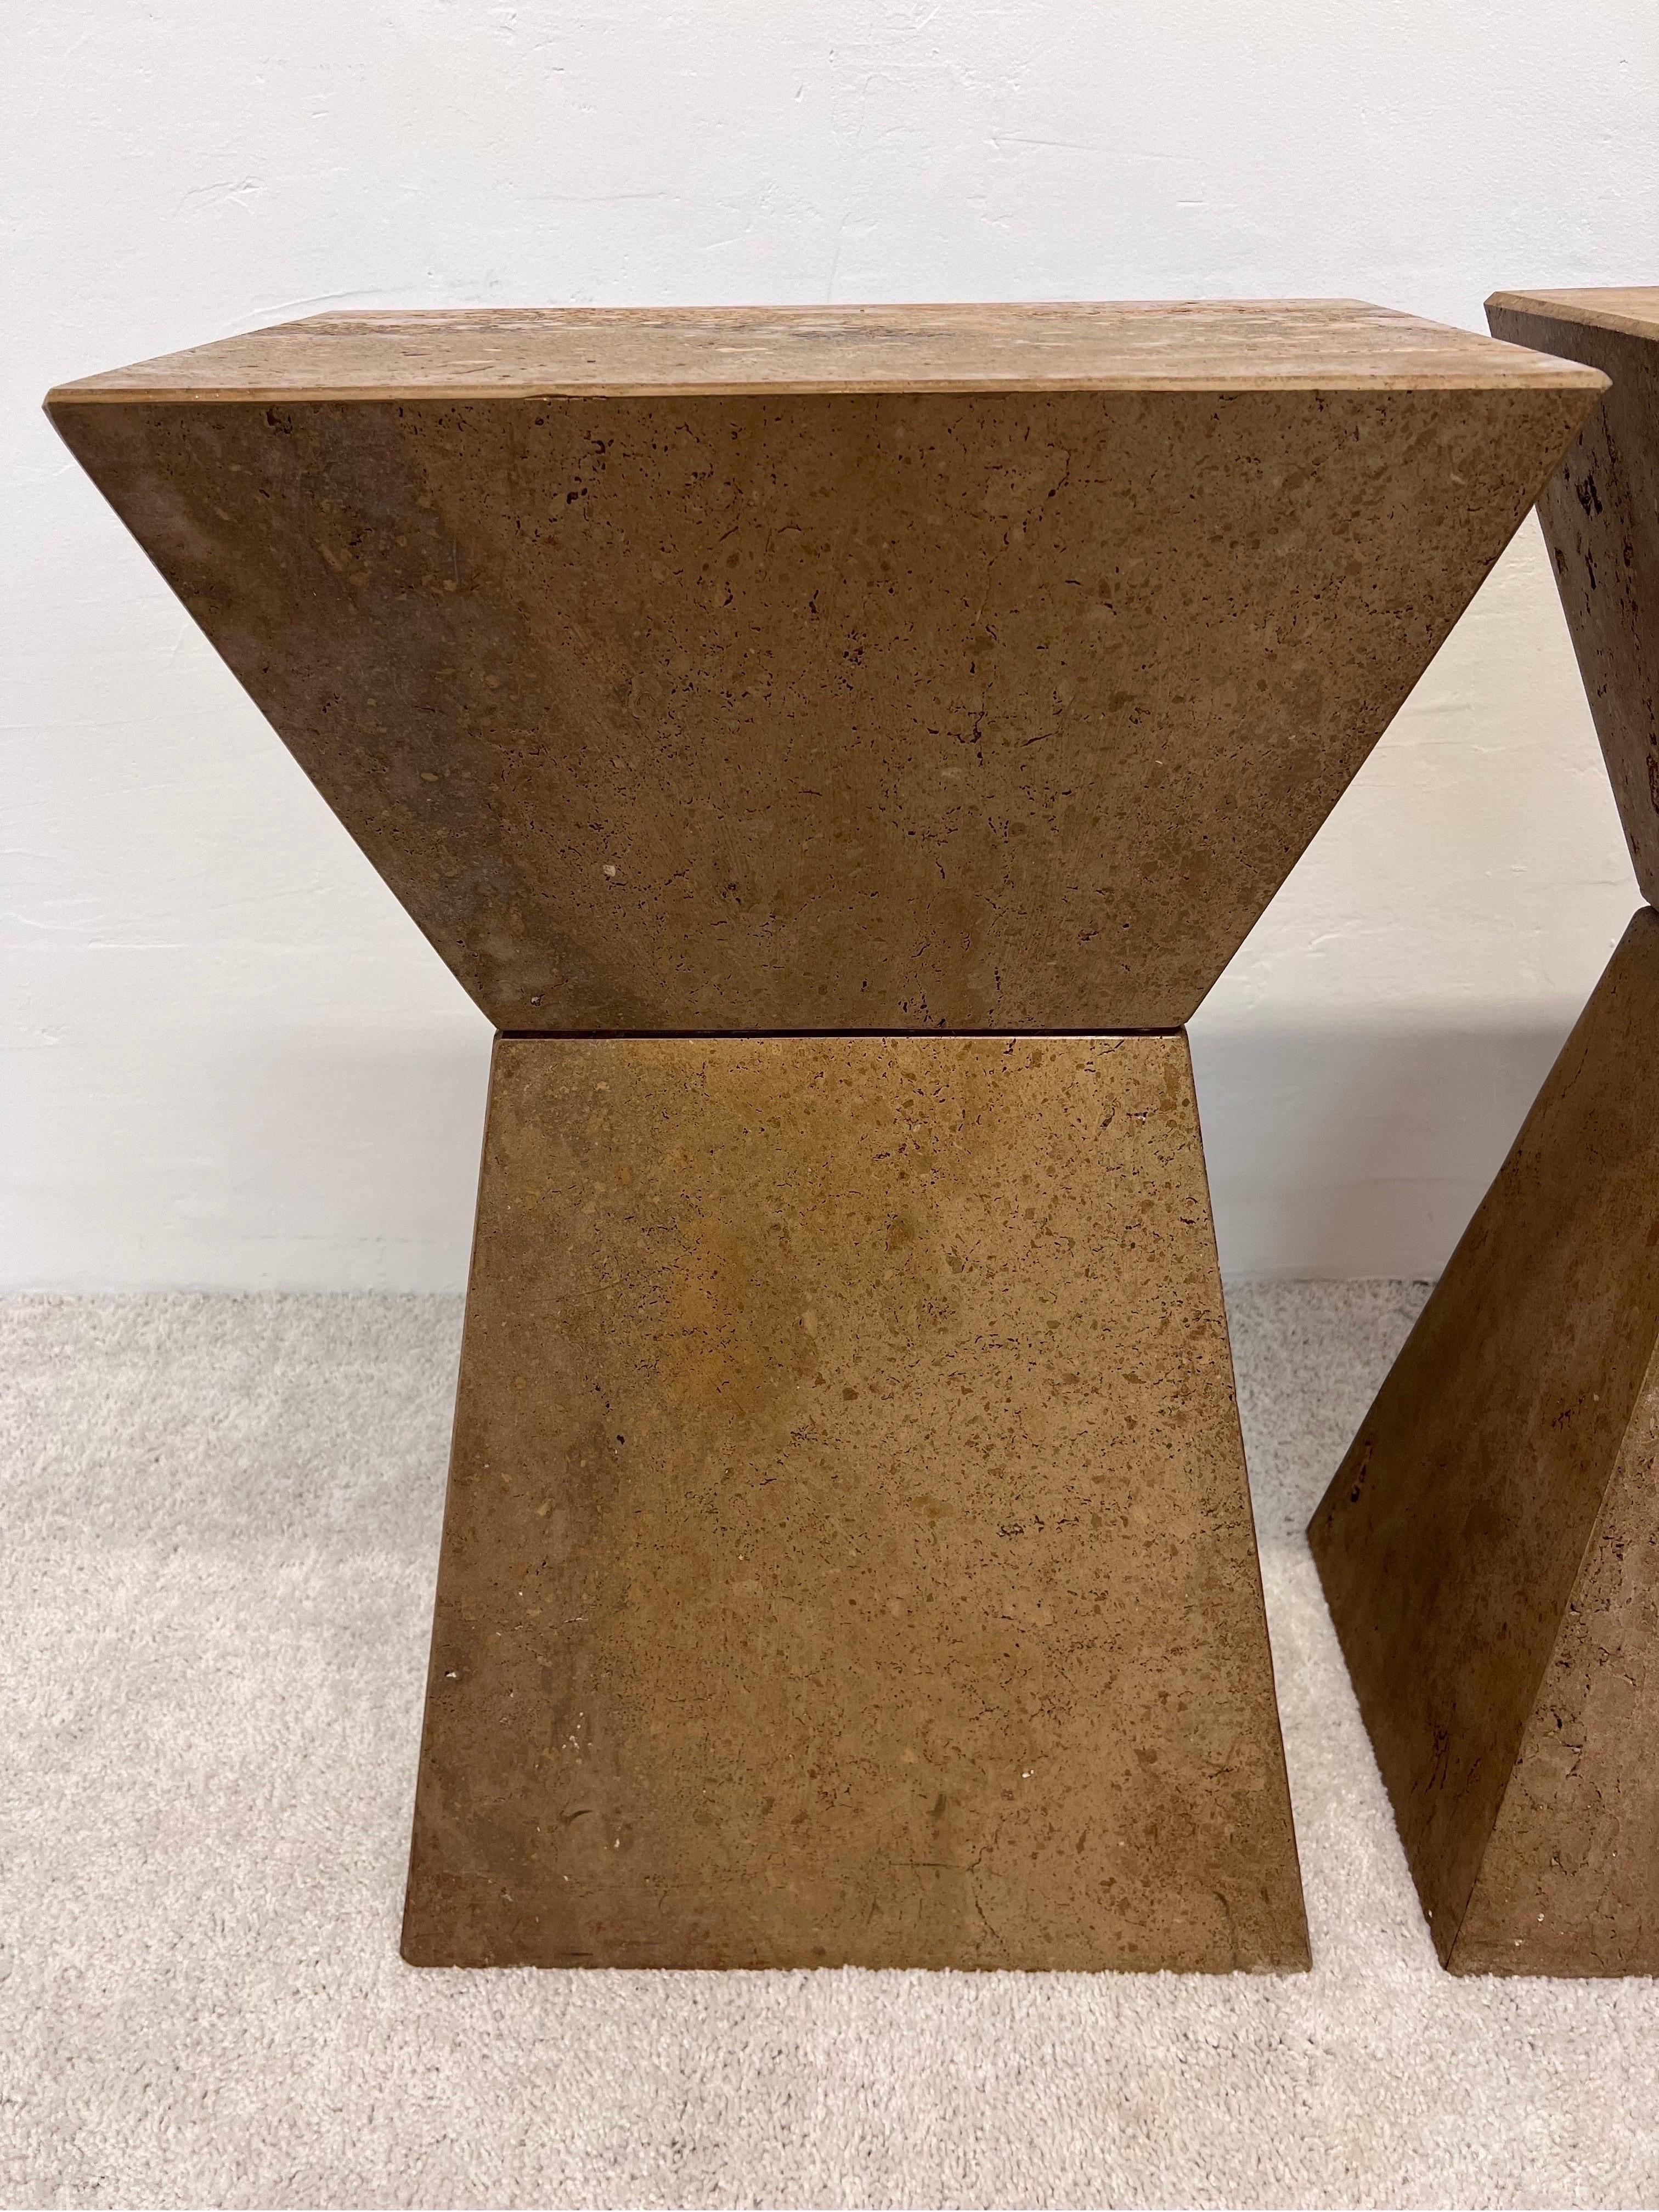 Geometric Faceted Italian Travertine Pedestal Tables, a Pair 2